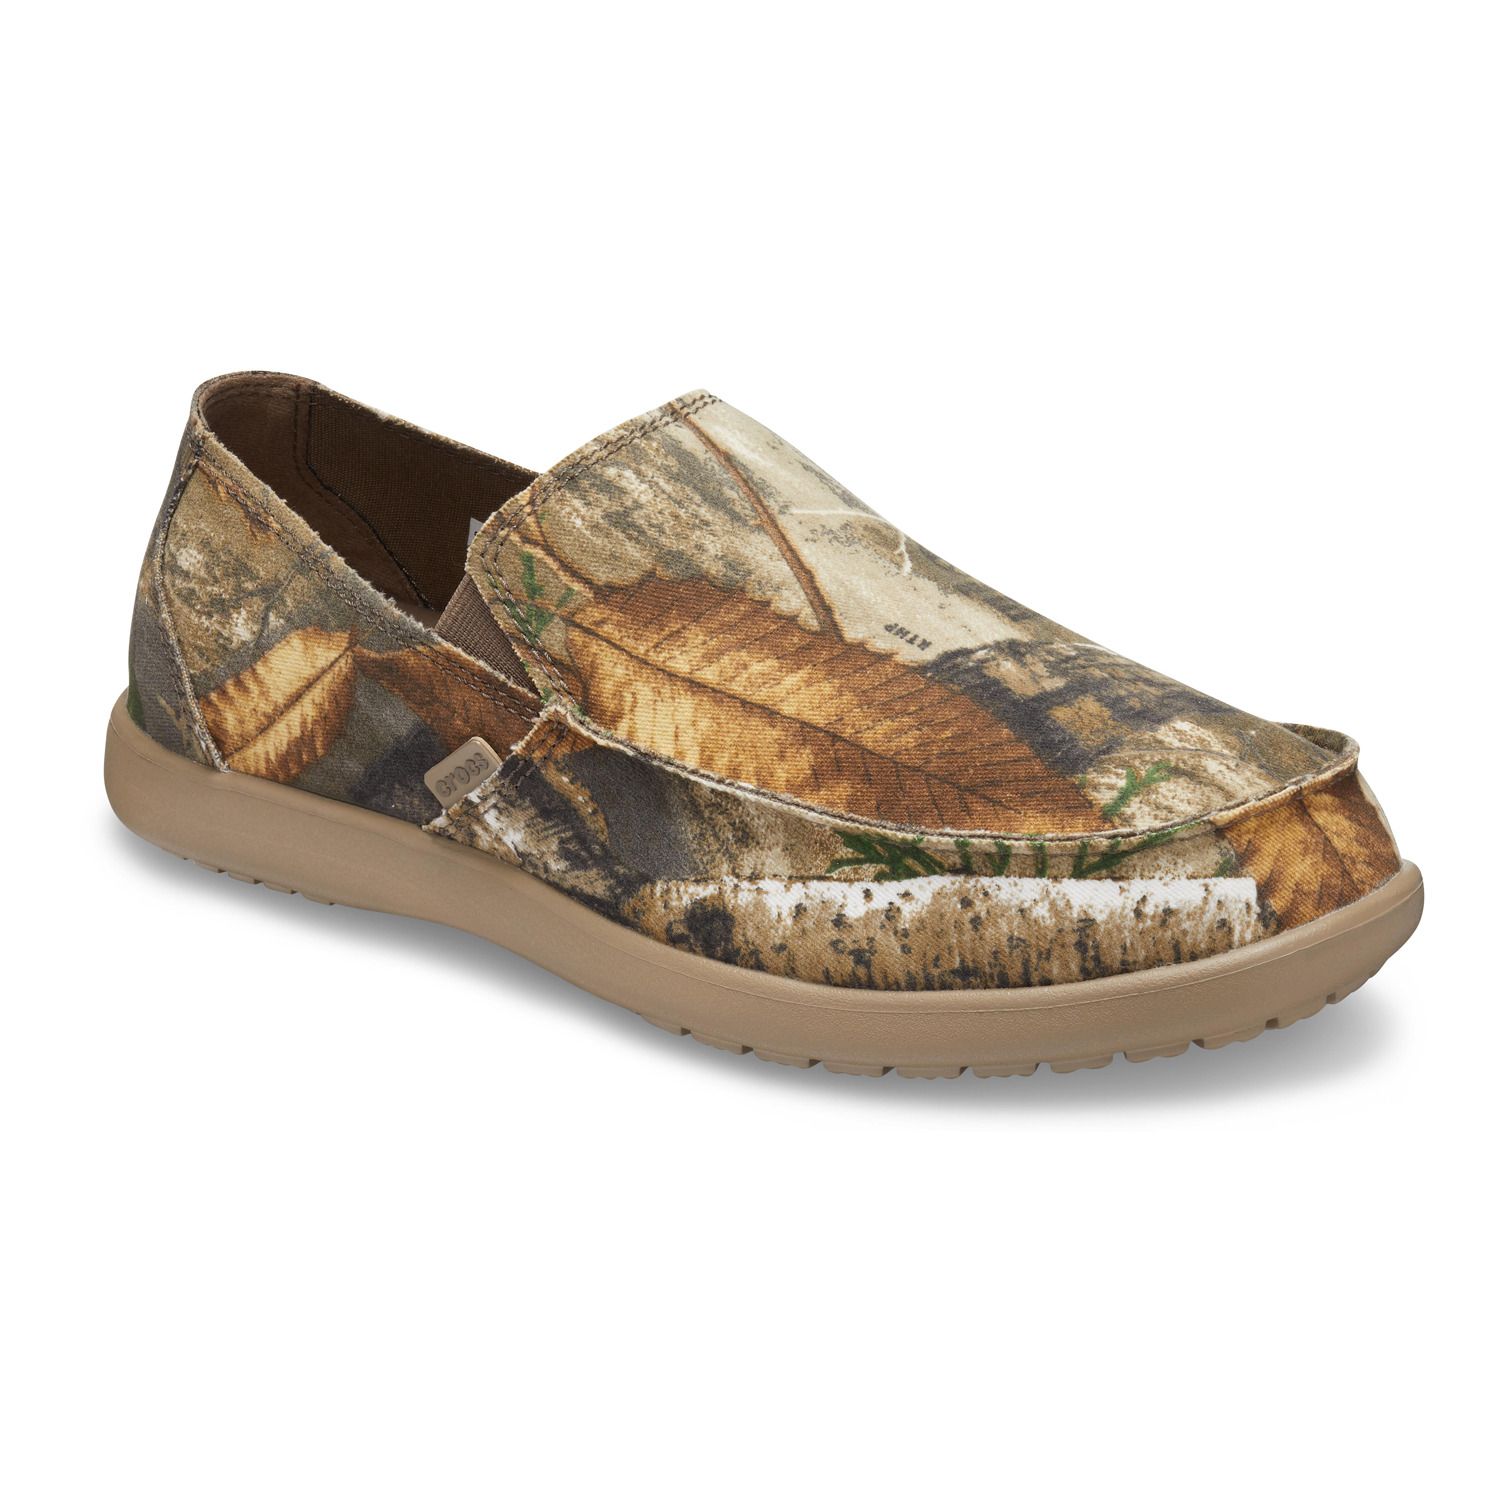 crocs slip on loafers